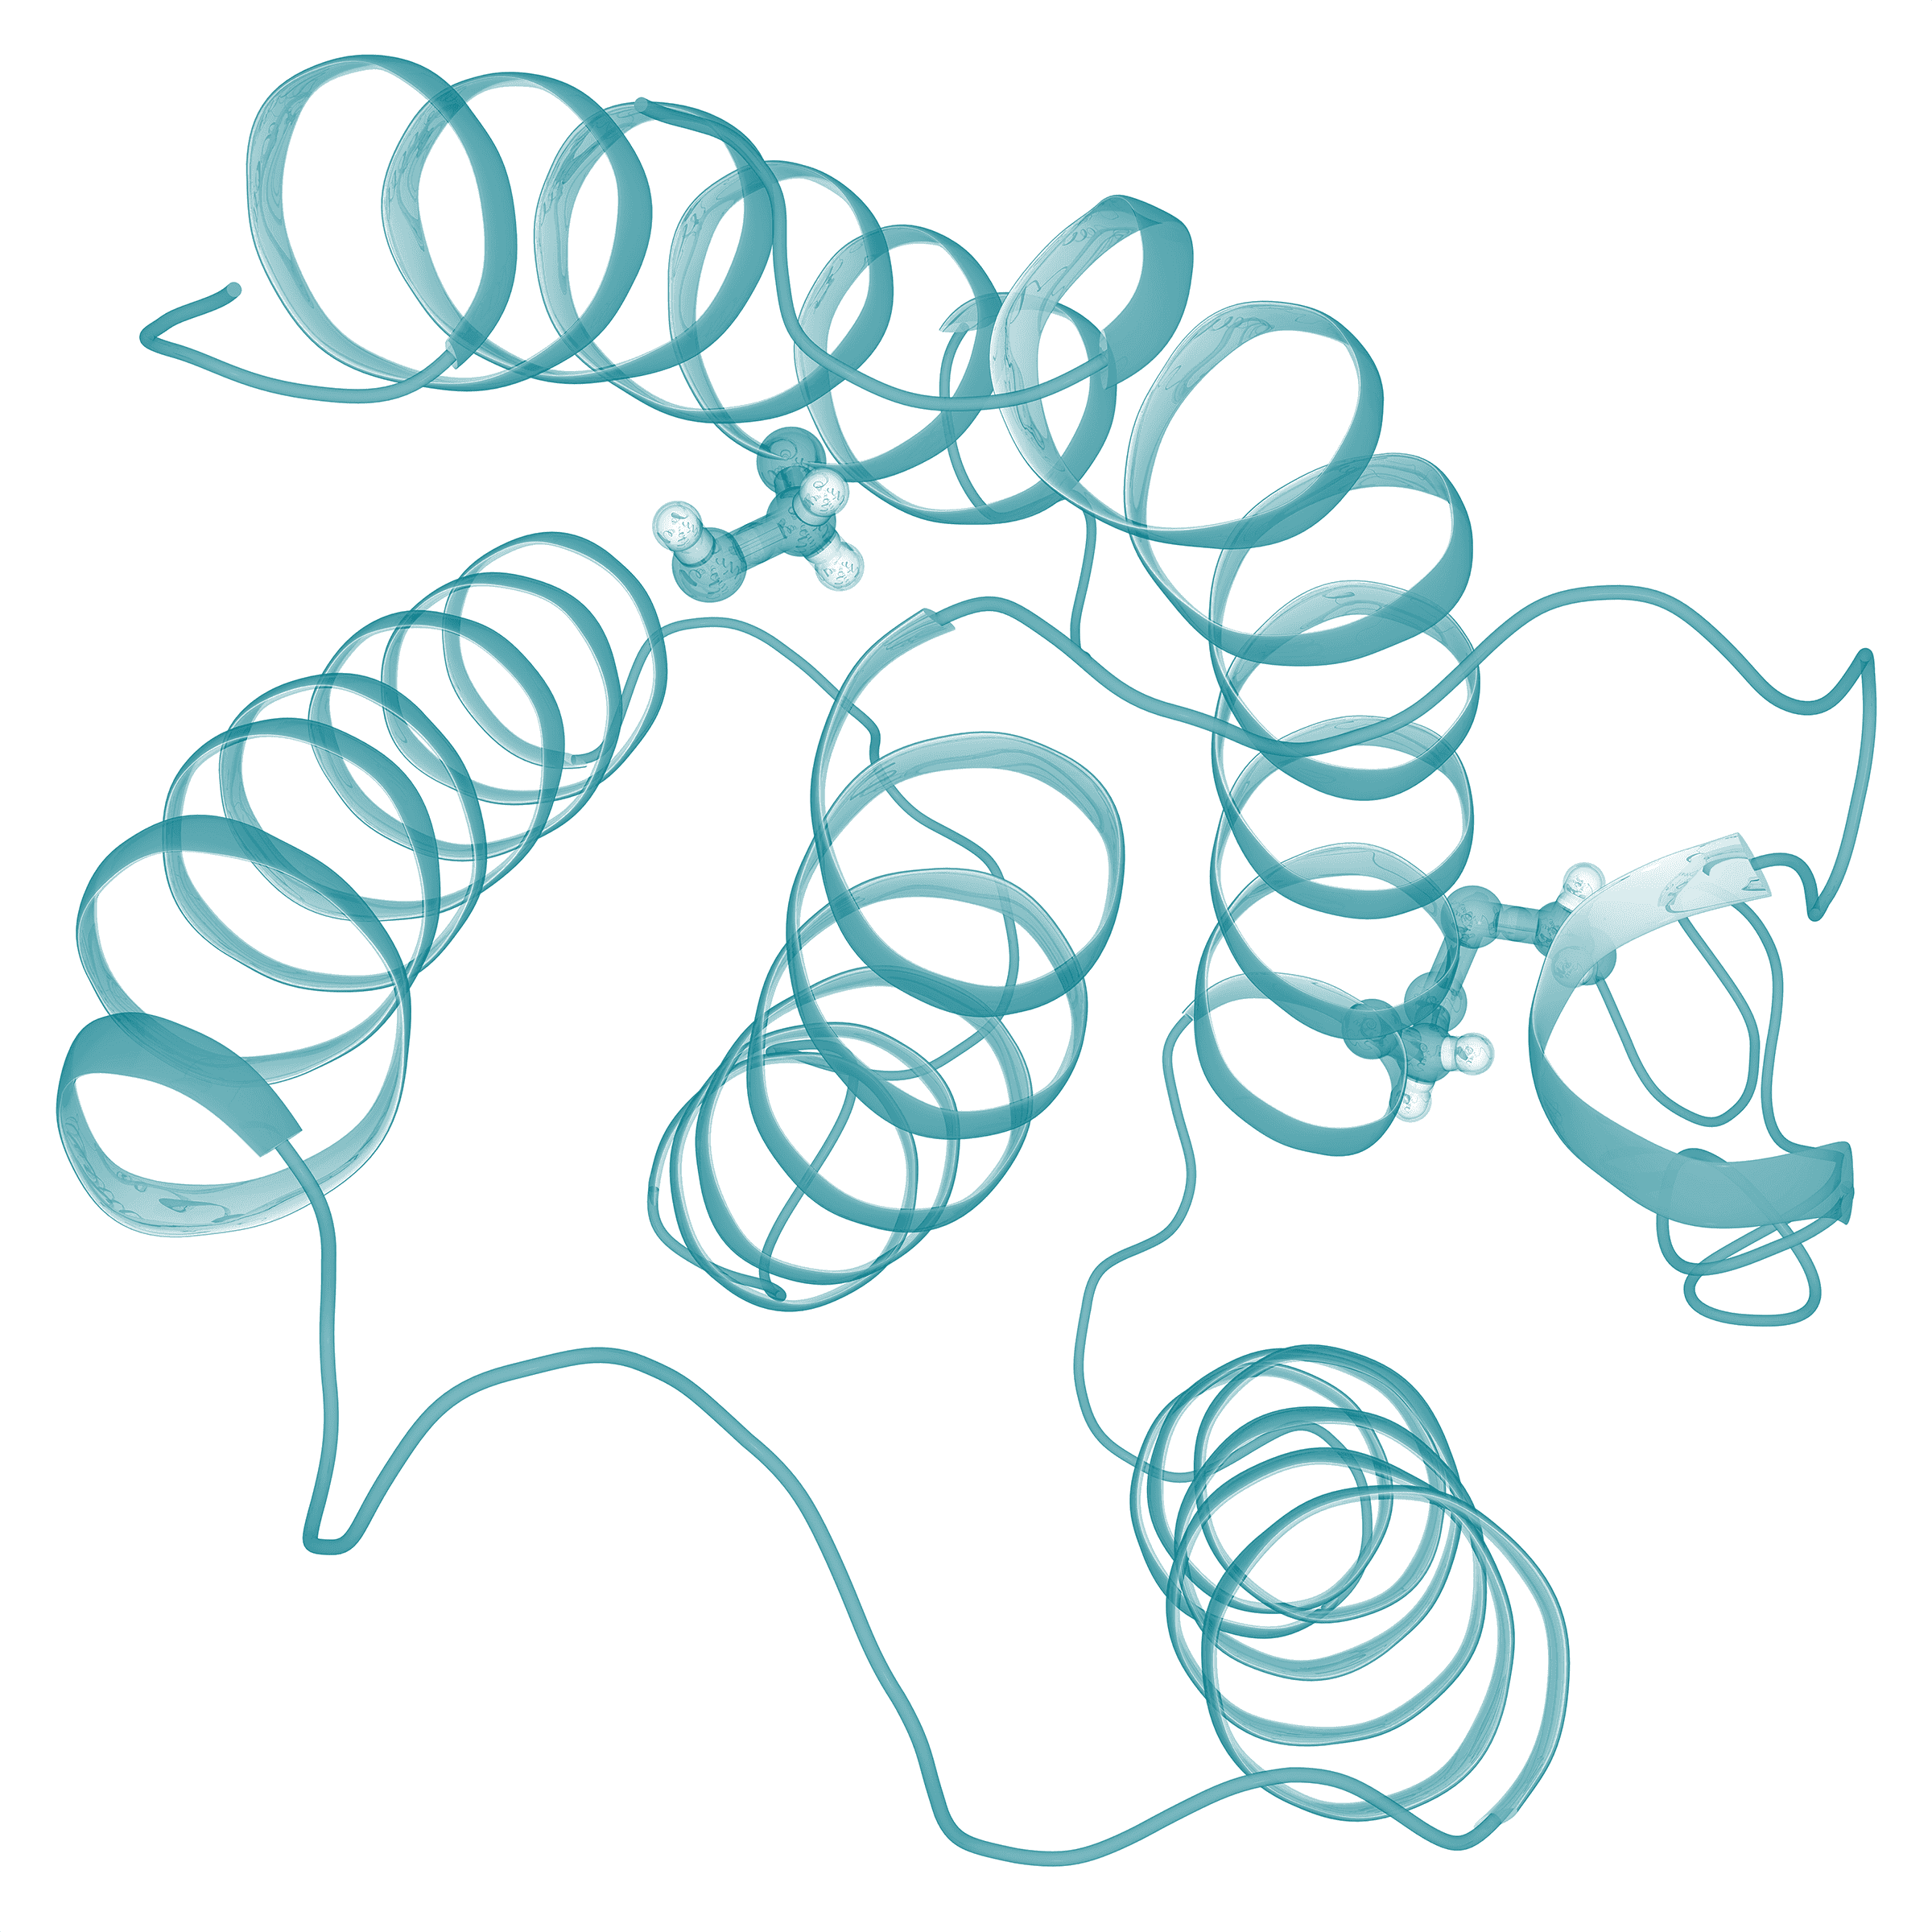 DNA strand background graphic